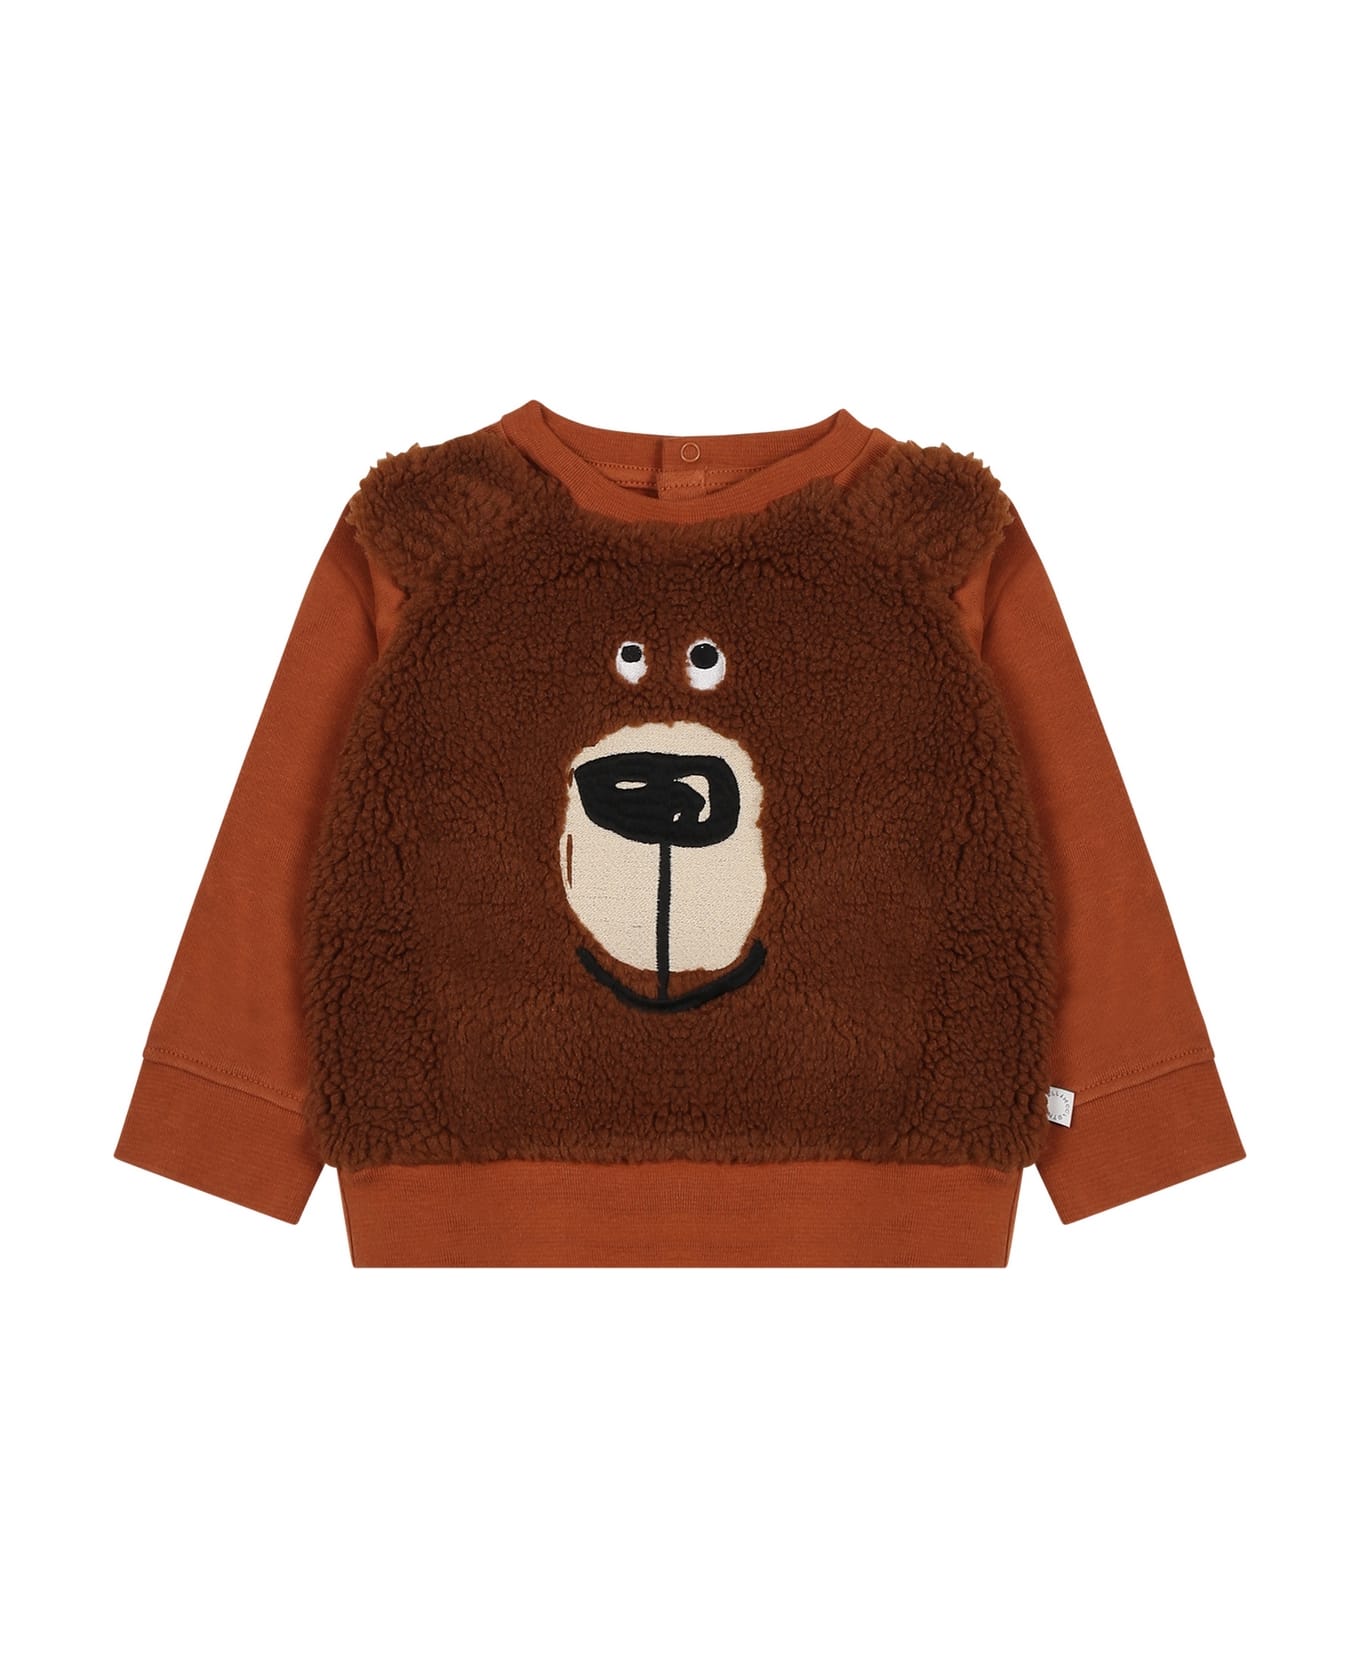 Stella McCartney Kids Brown Sweatshirt For Baby Boy With Bear - Brown